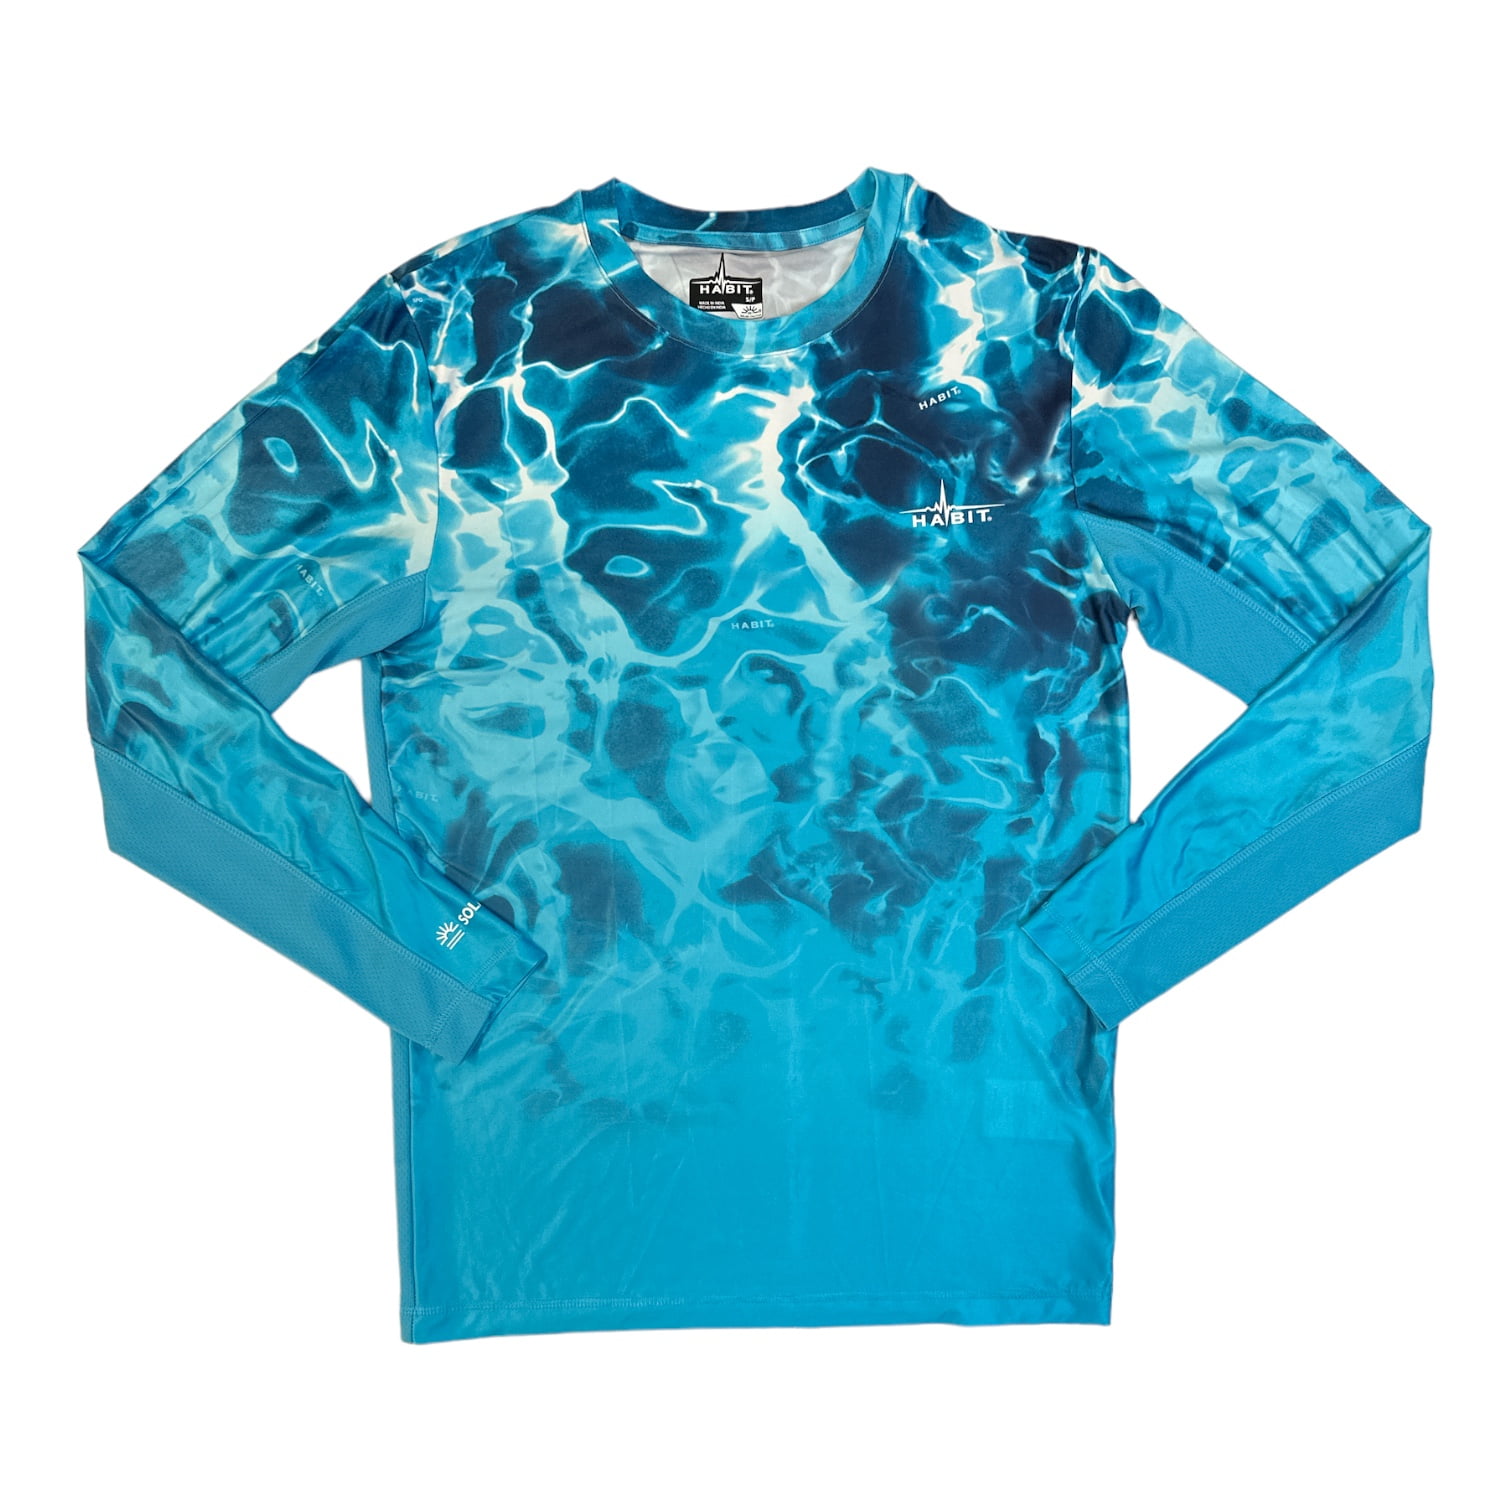 Habit Men's UPF 40+ Habit Waves Long Sleeve Hooded Fishing Shirt XL  843049185679 